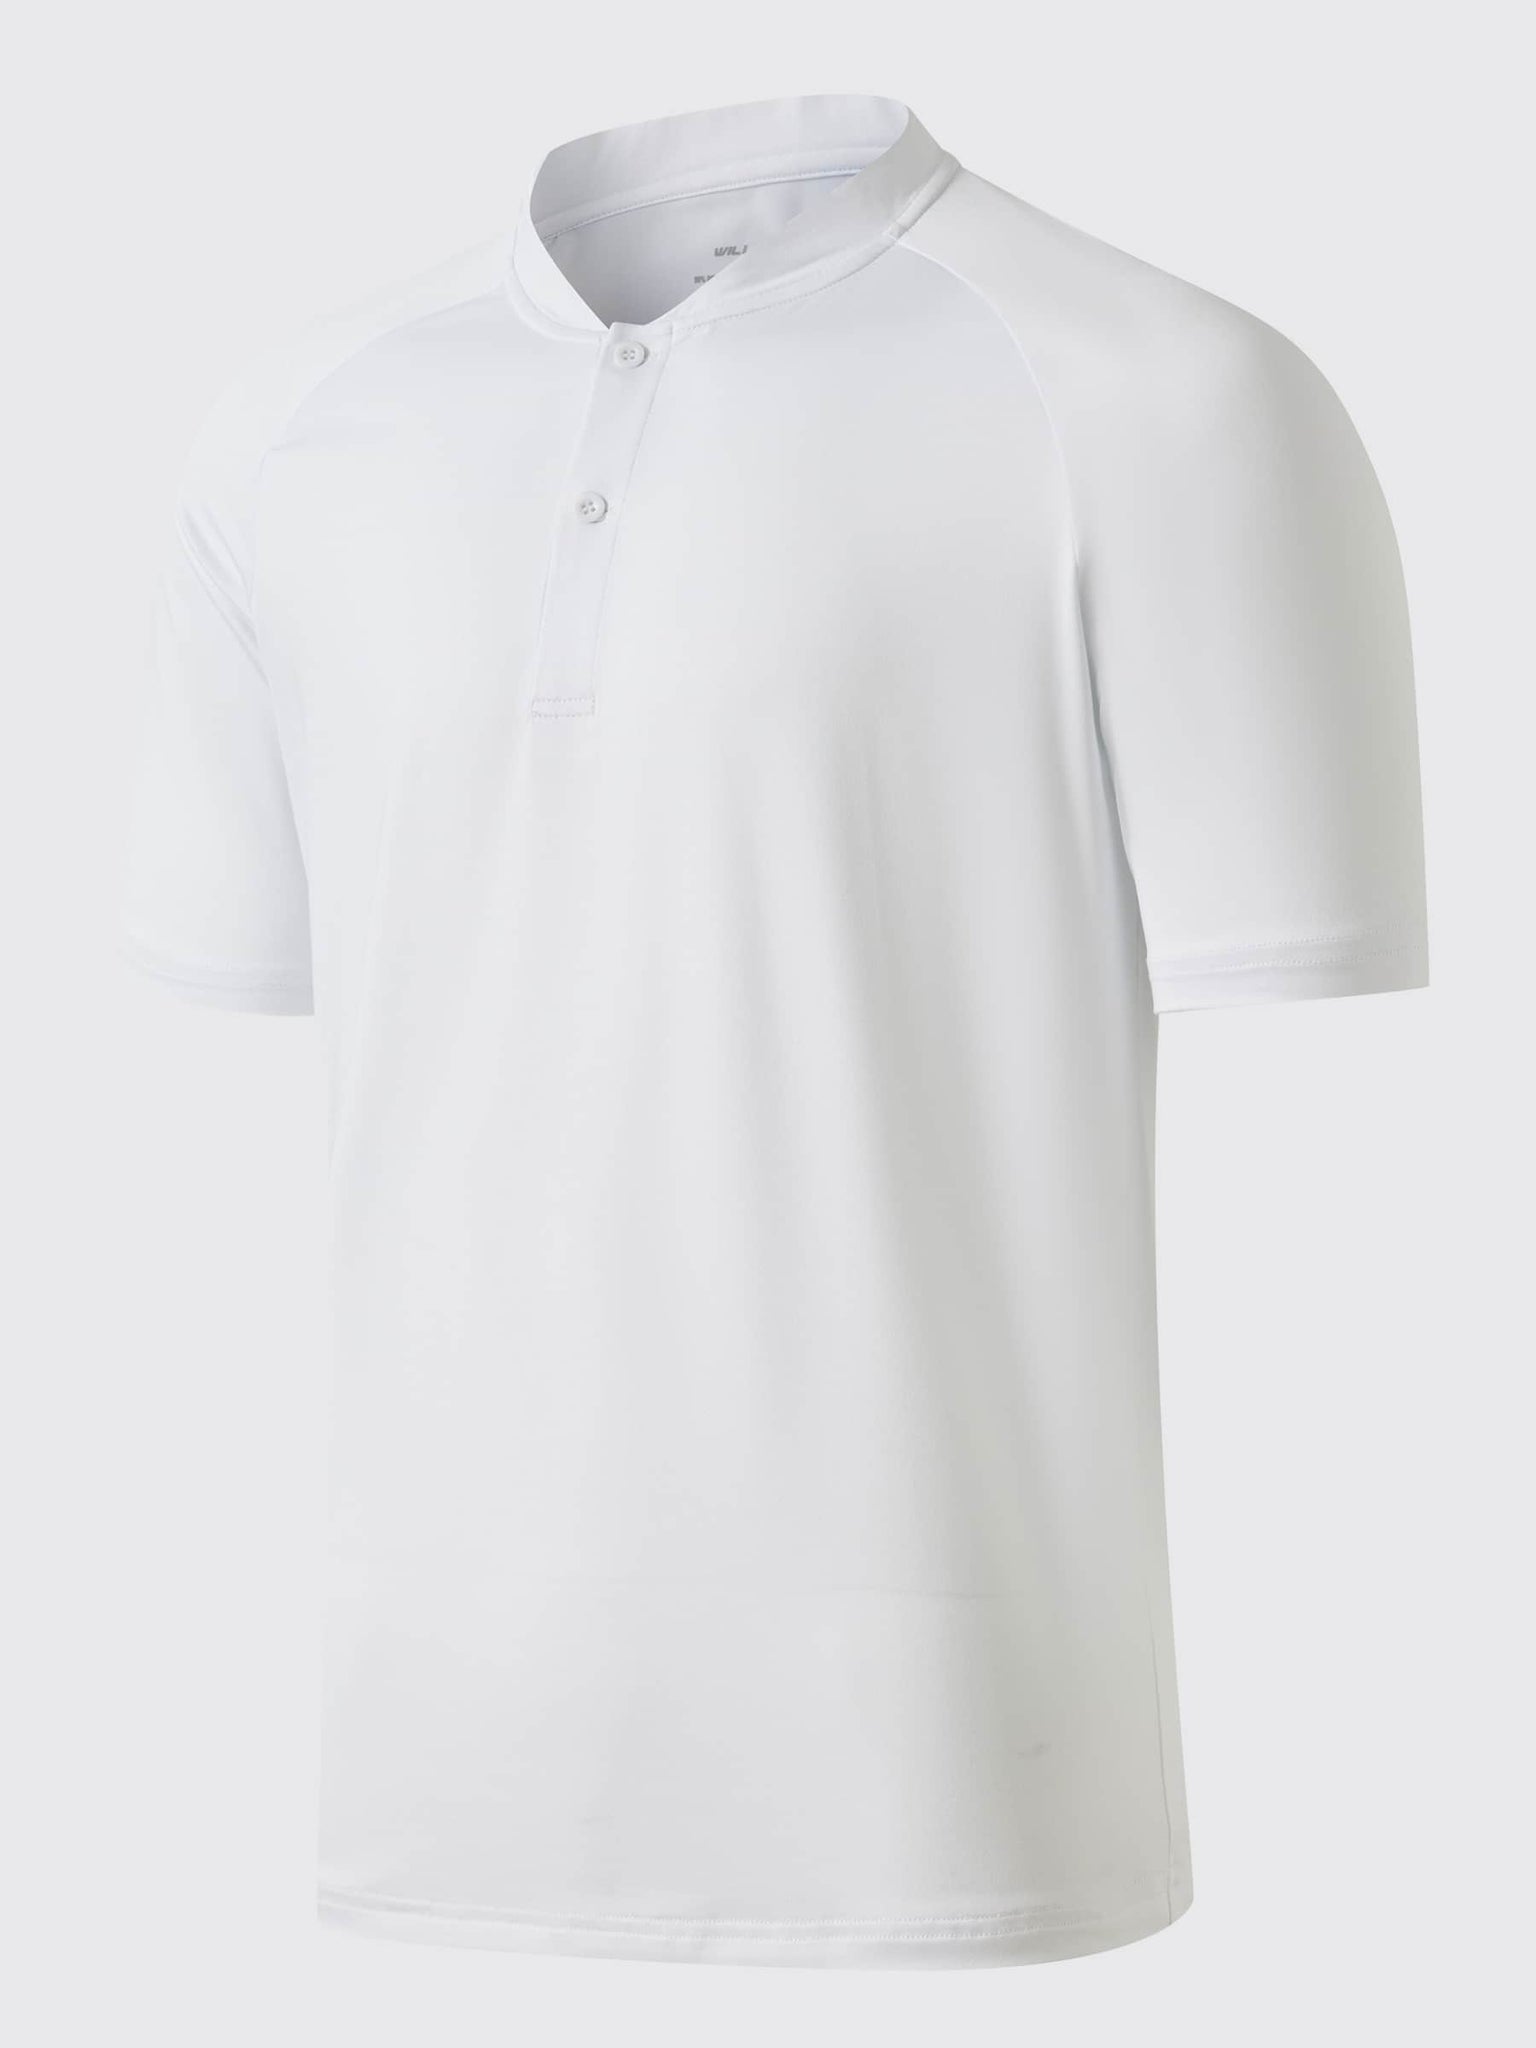 Men's Tennis Shirts Sun Protection_white1